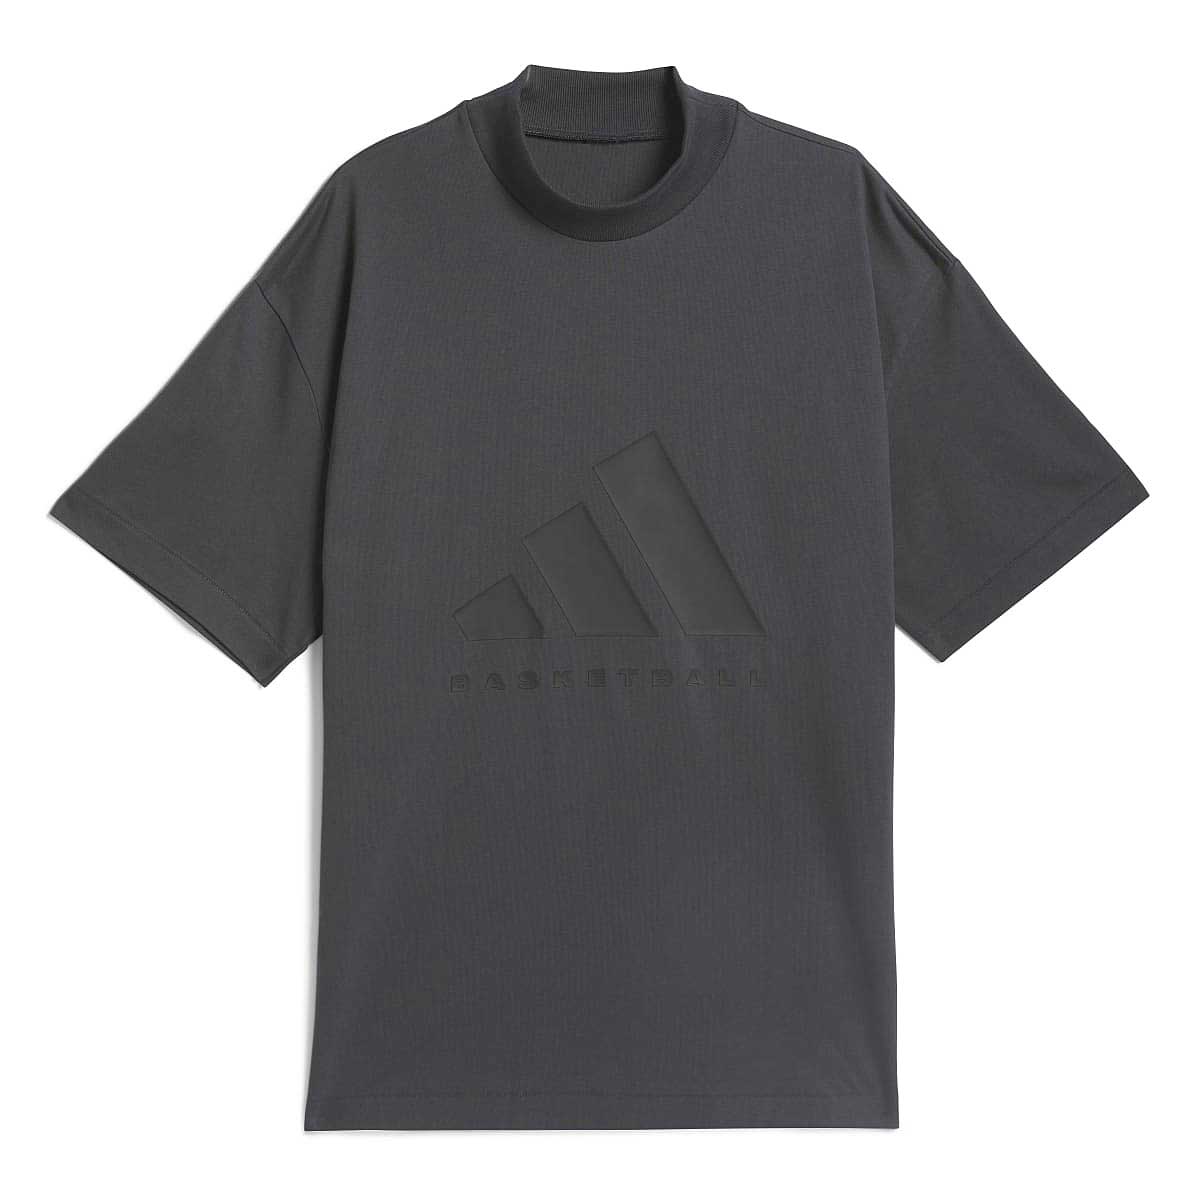 Adidas Chapter 1 Basketball T-shirt, Carbon/carbon XL